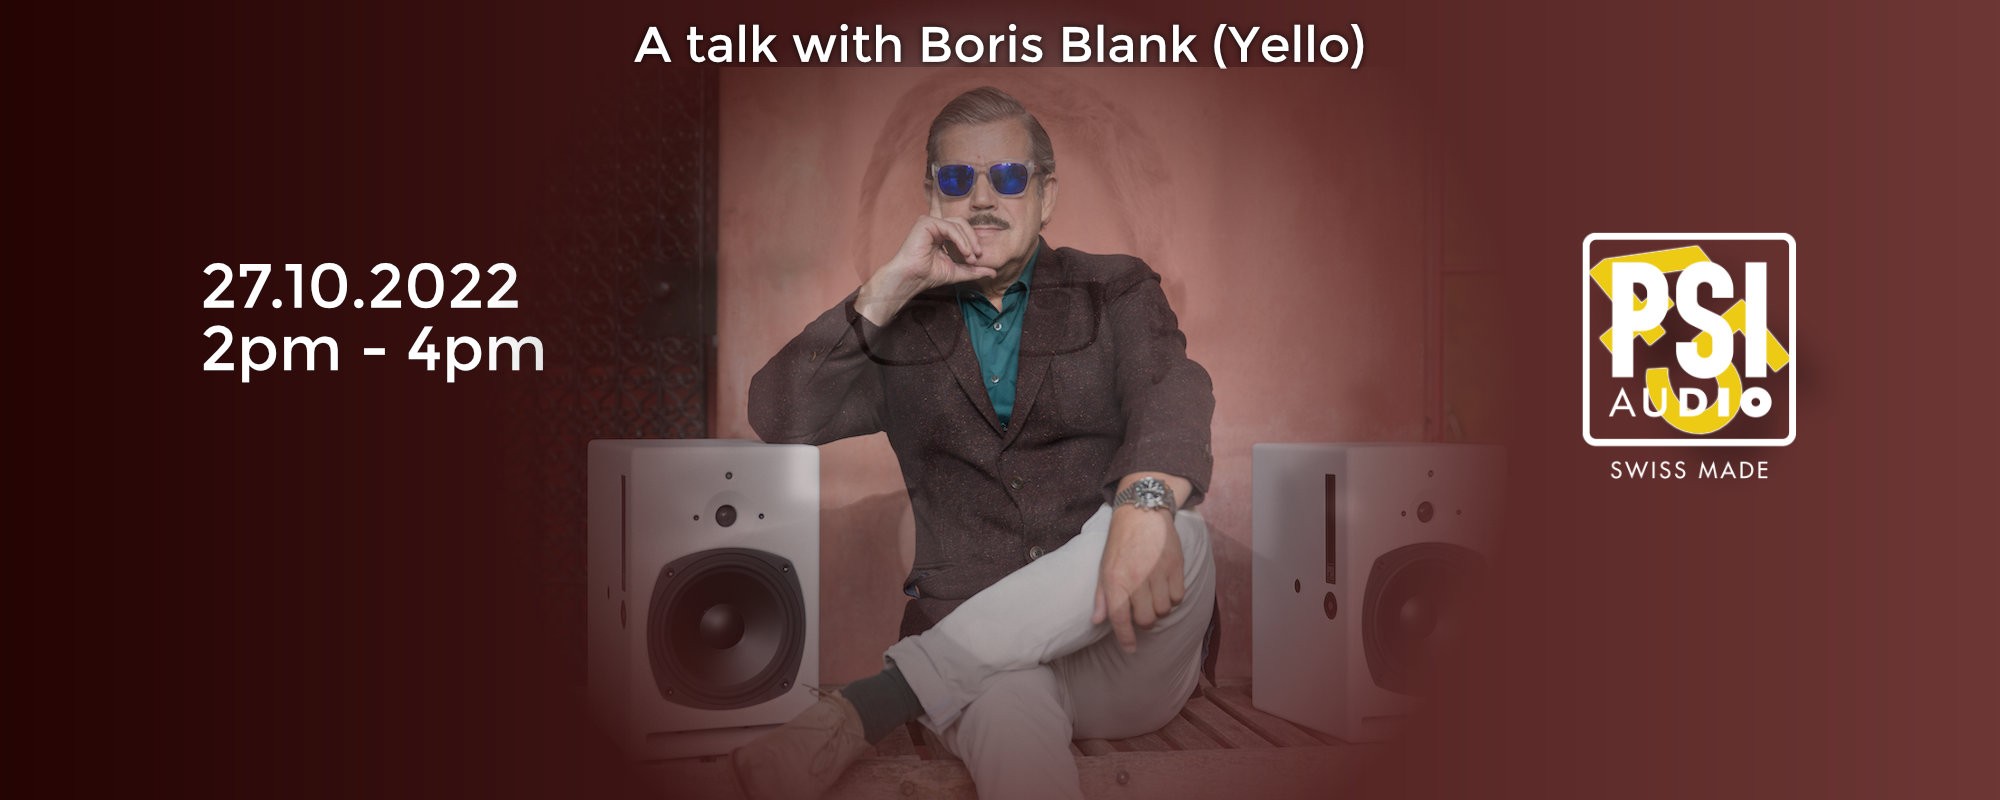 A talk with Boris Blank - PSI Audio 45th anniversary